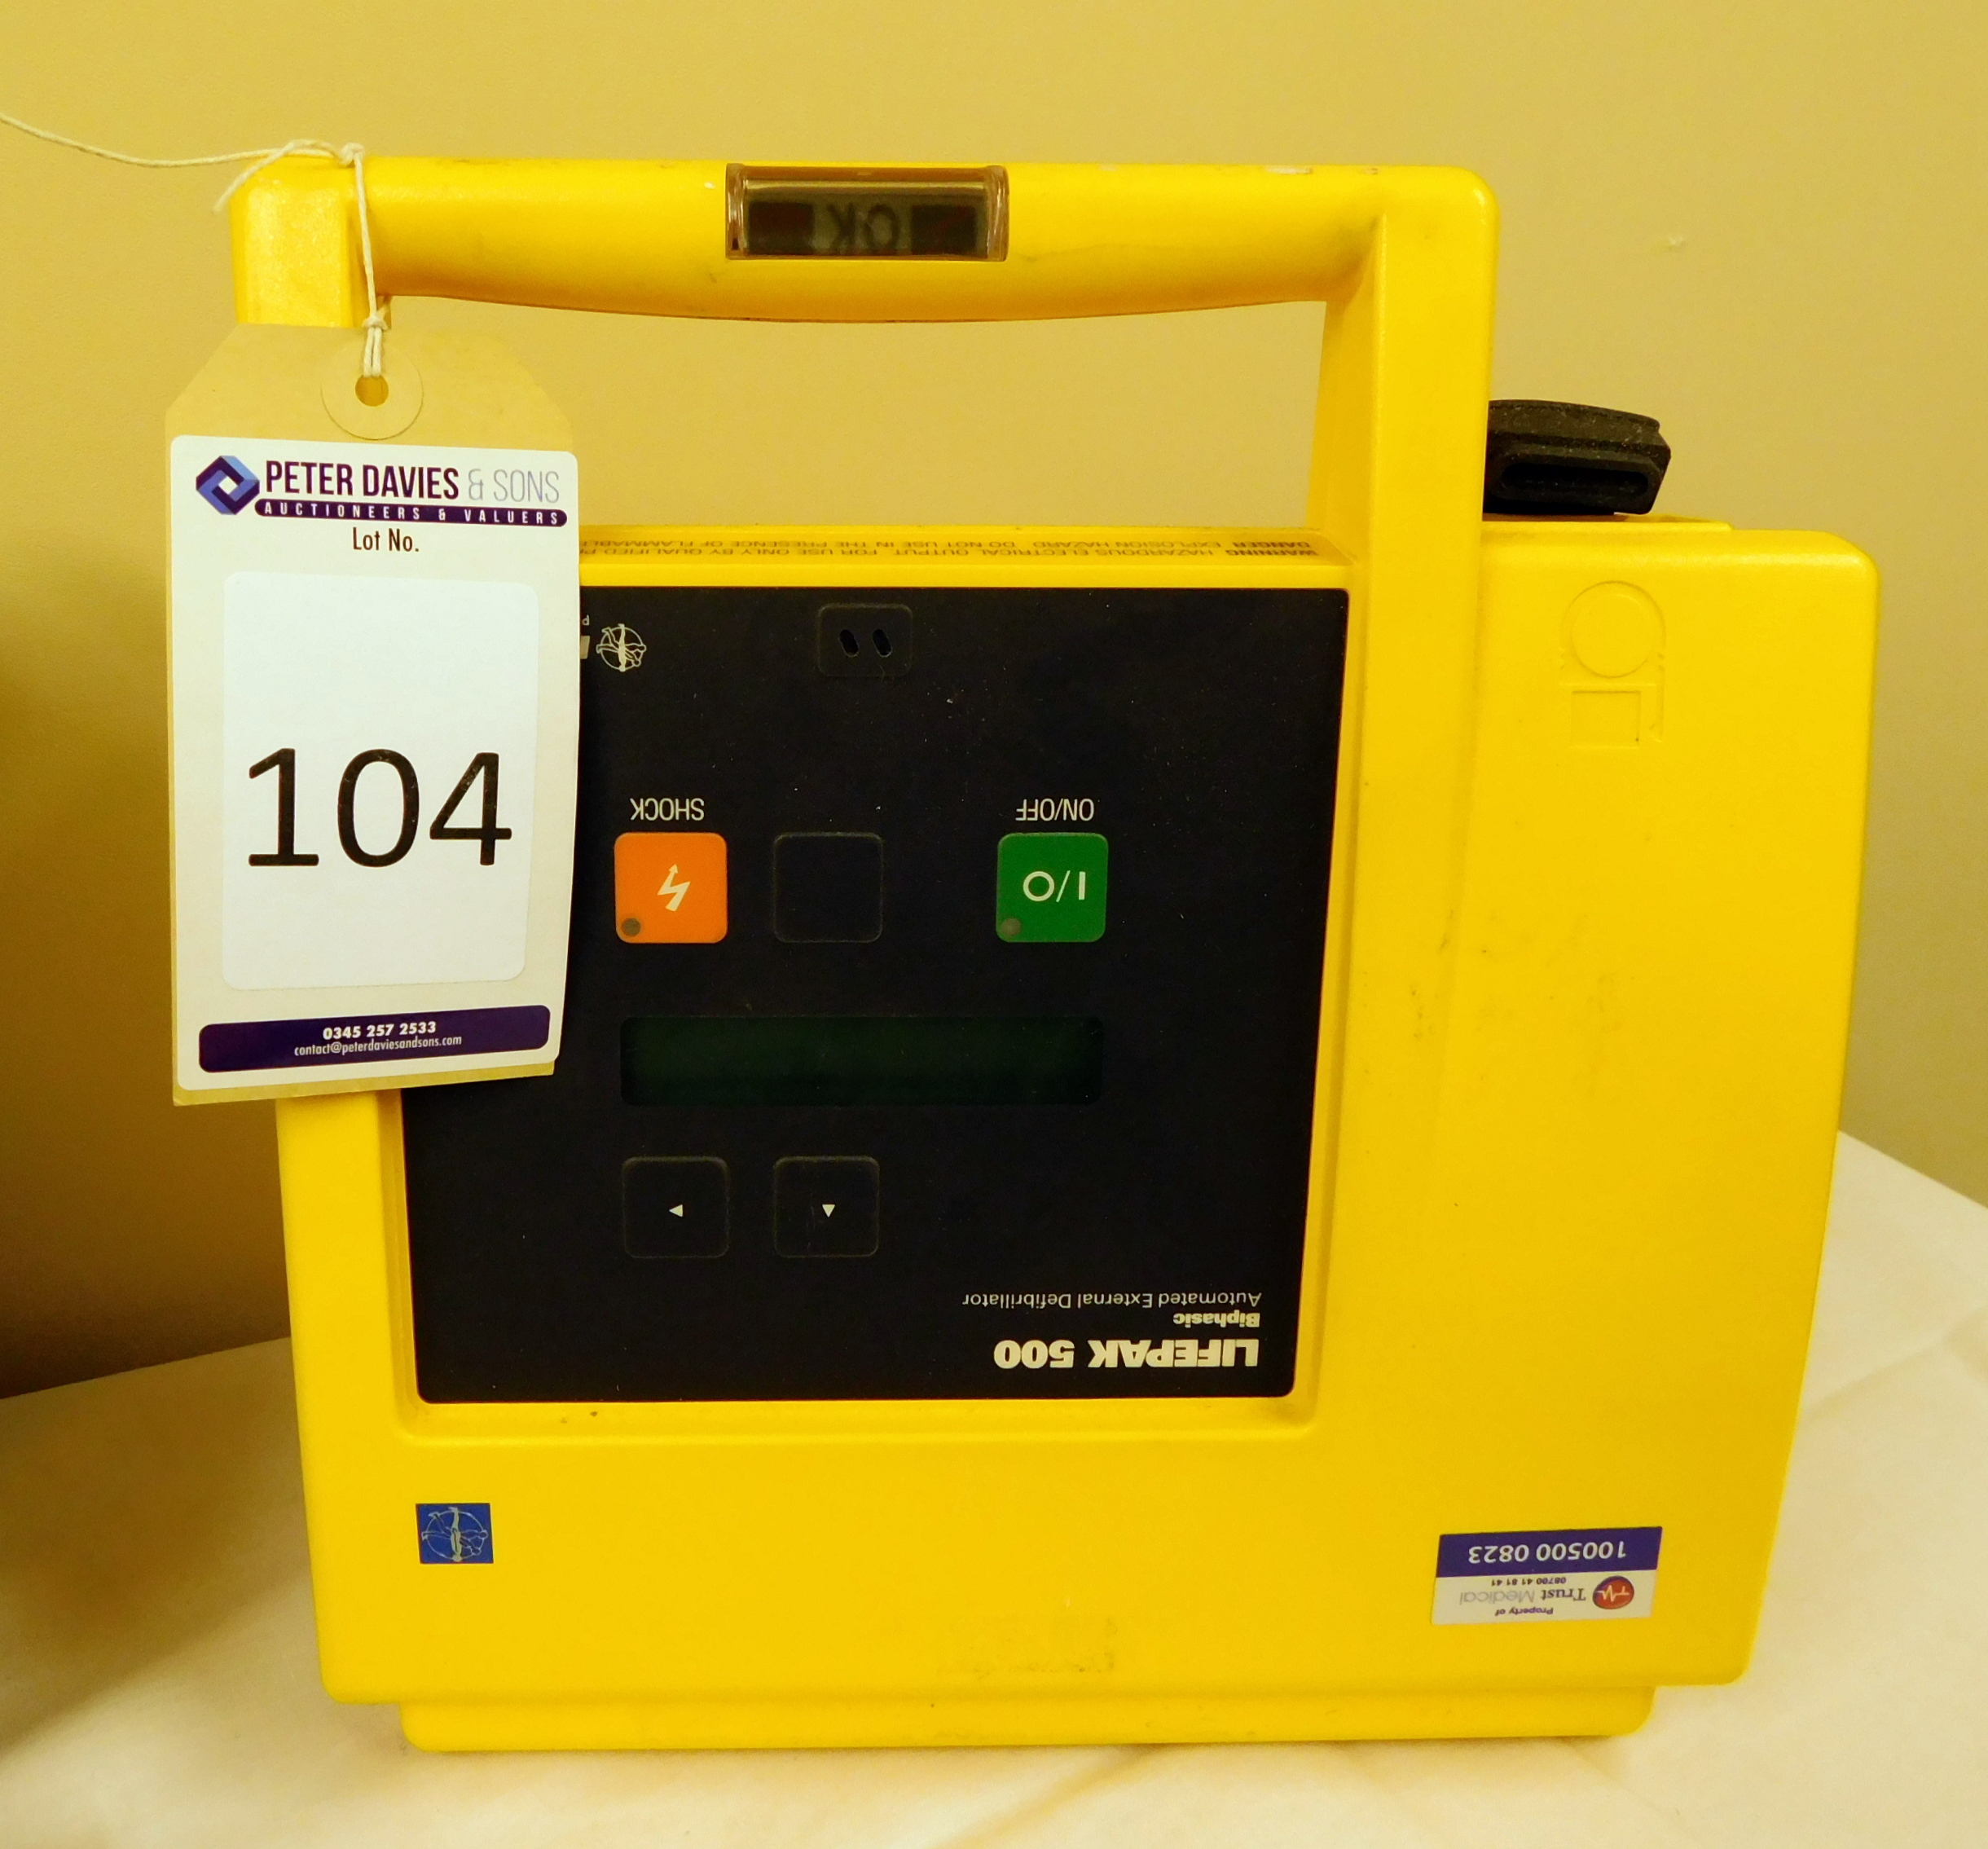 Medtronic Lifepak 500 Defibrillator, Serial Number: 30445474, Asset Number: 1005000823